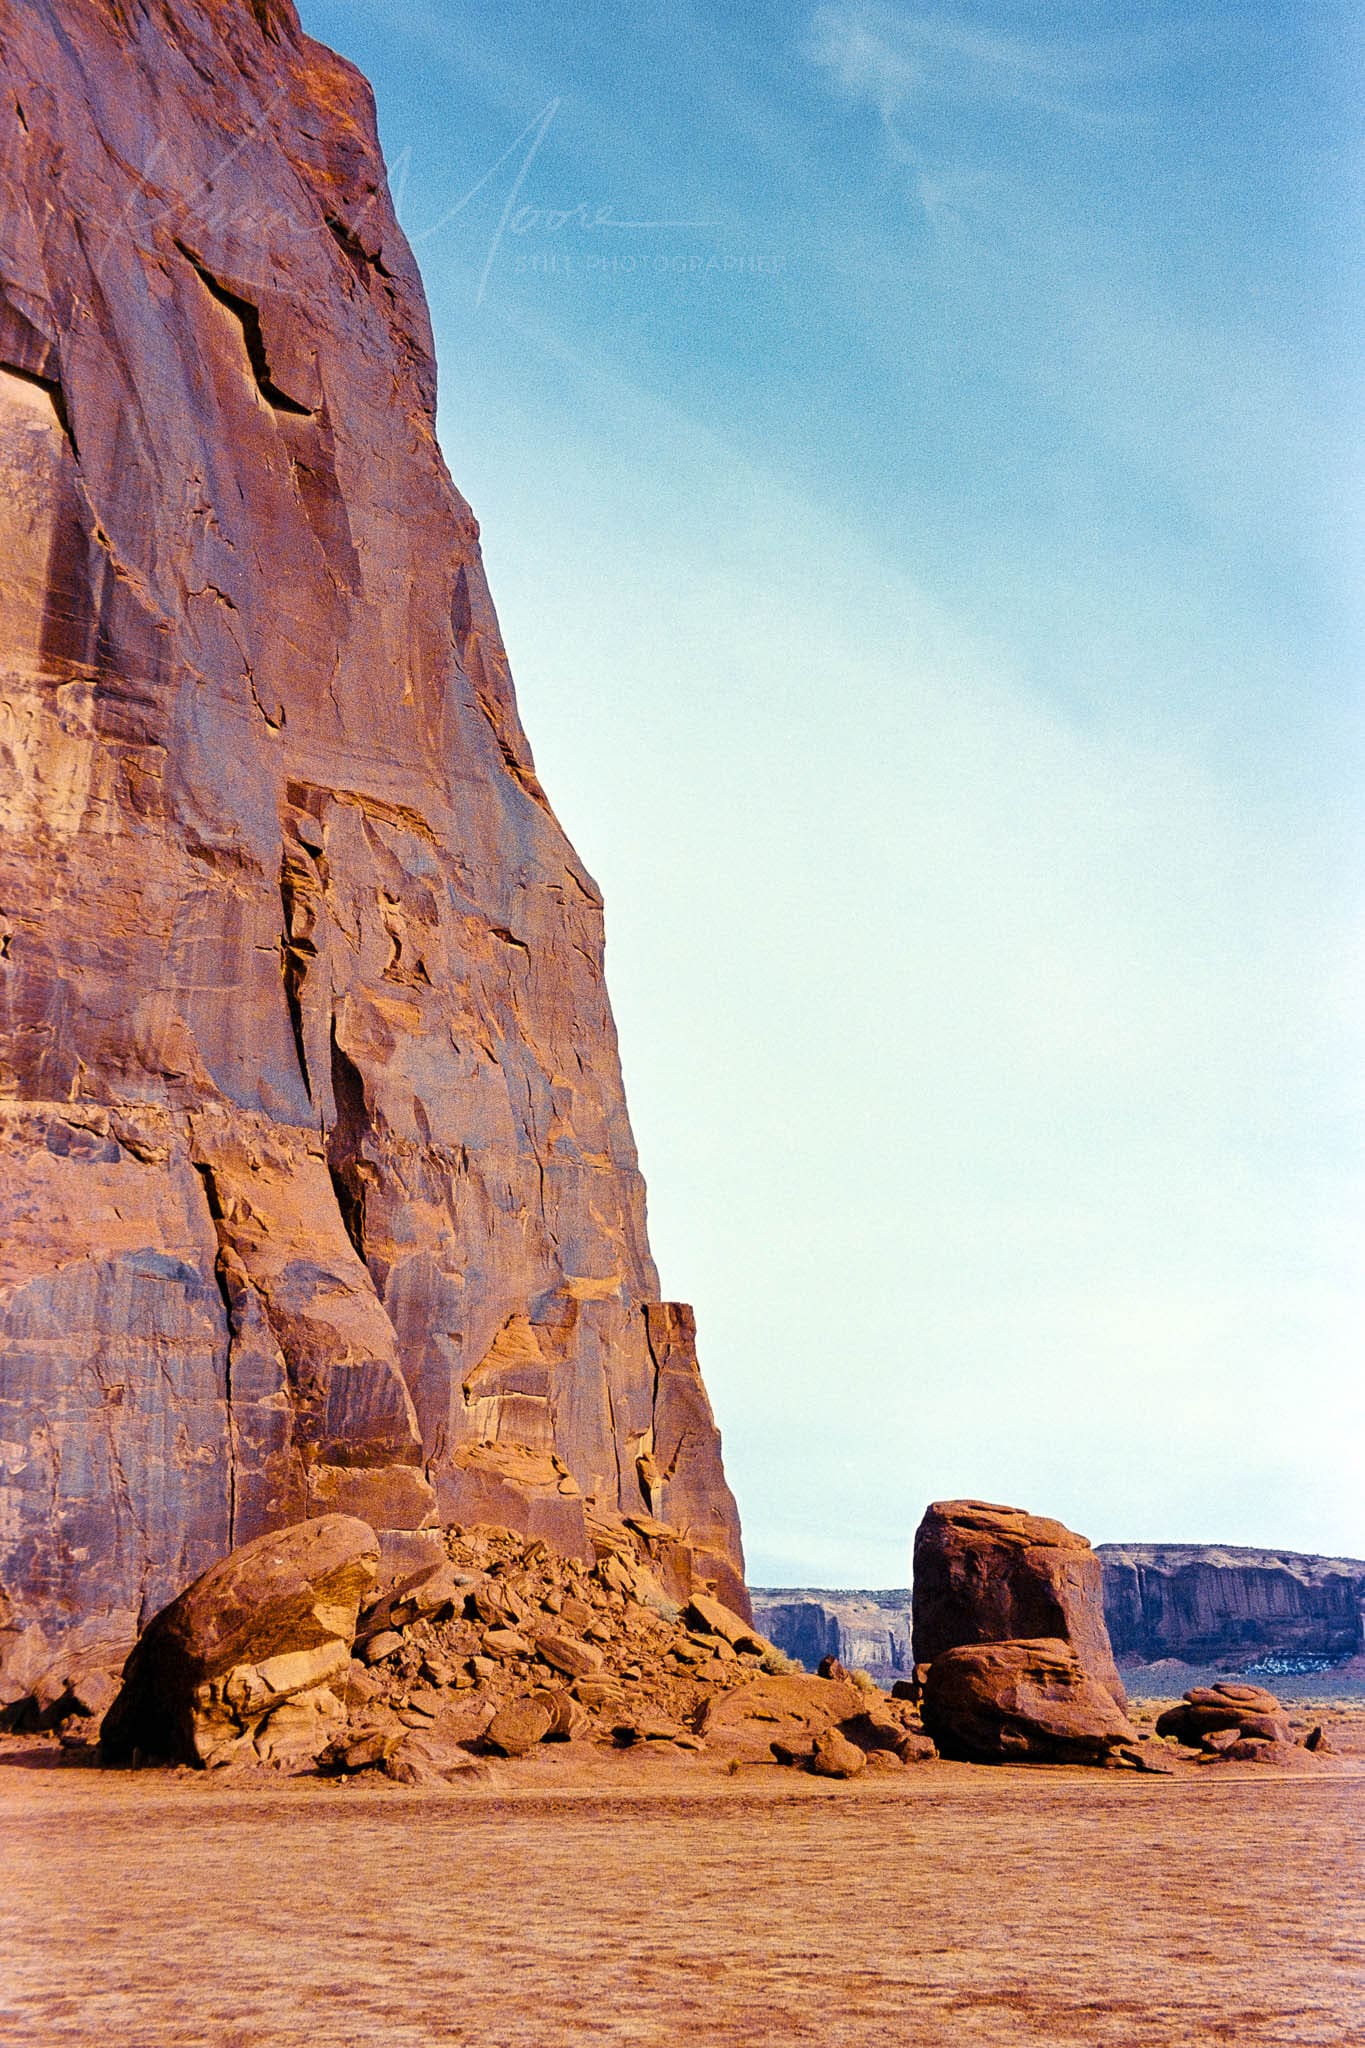 Stunning desert landscape featuring a massive reddish-brown cliff under a clear blue sky.